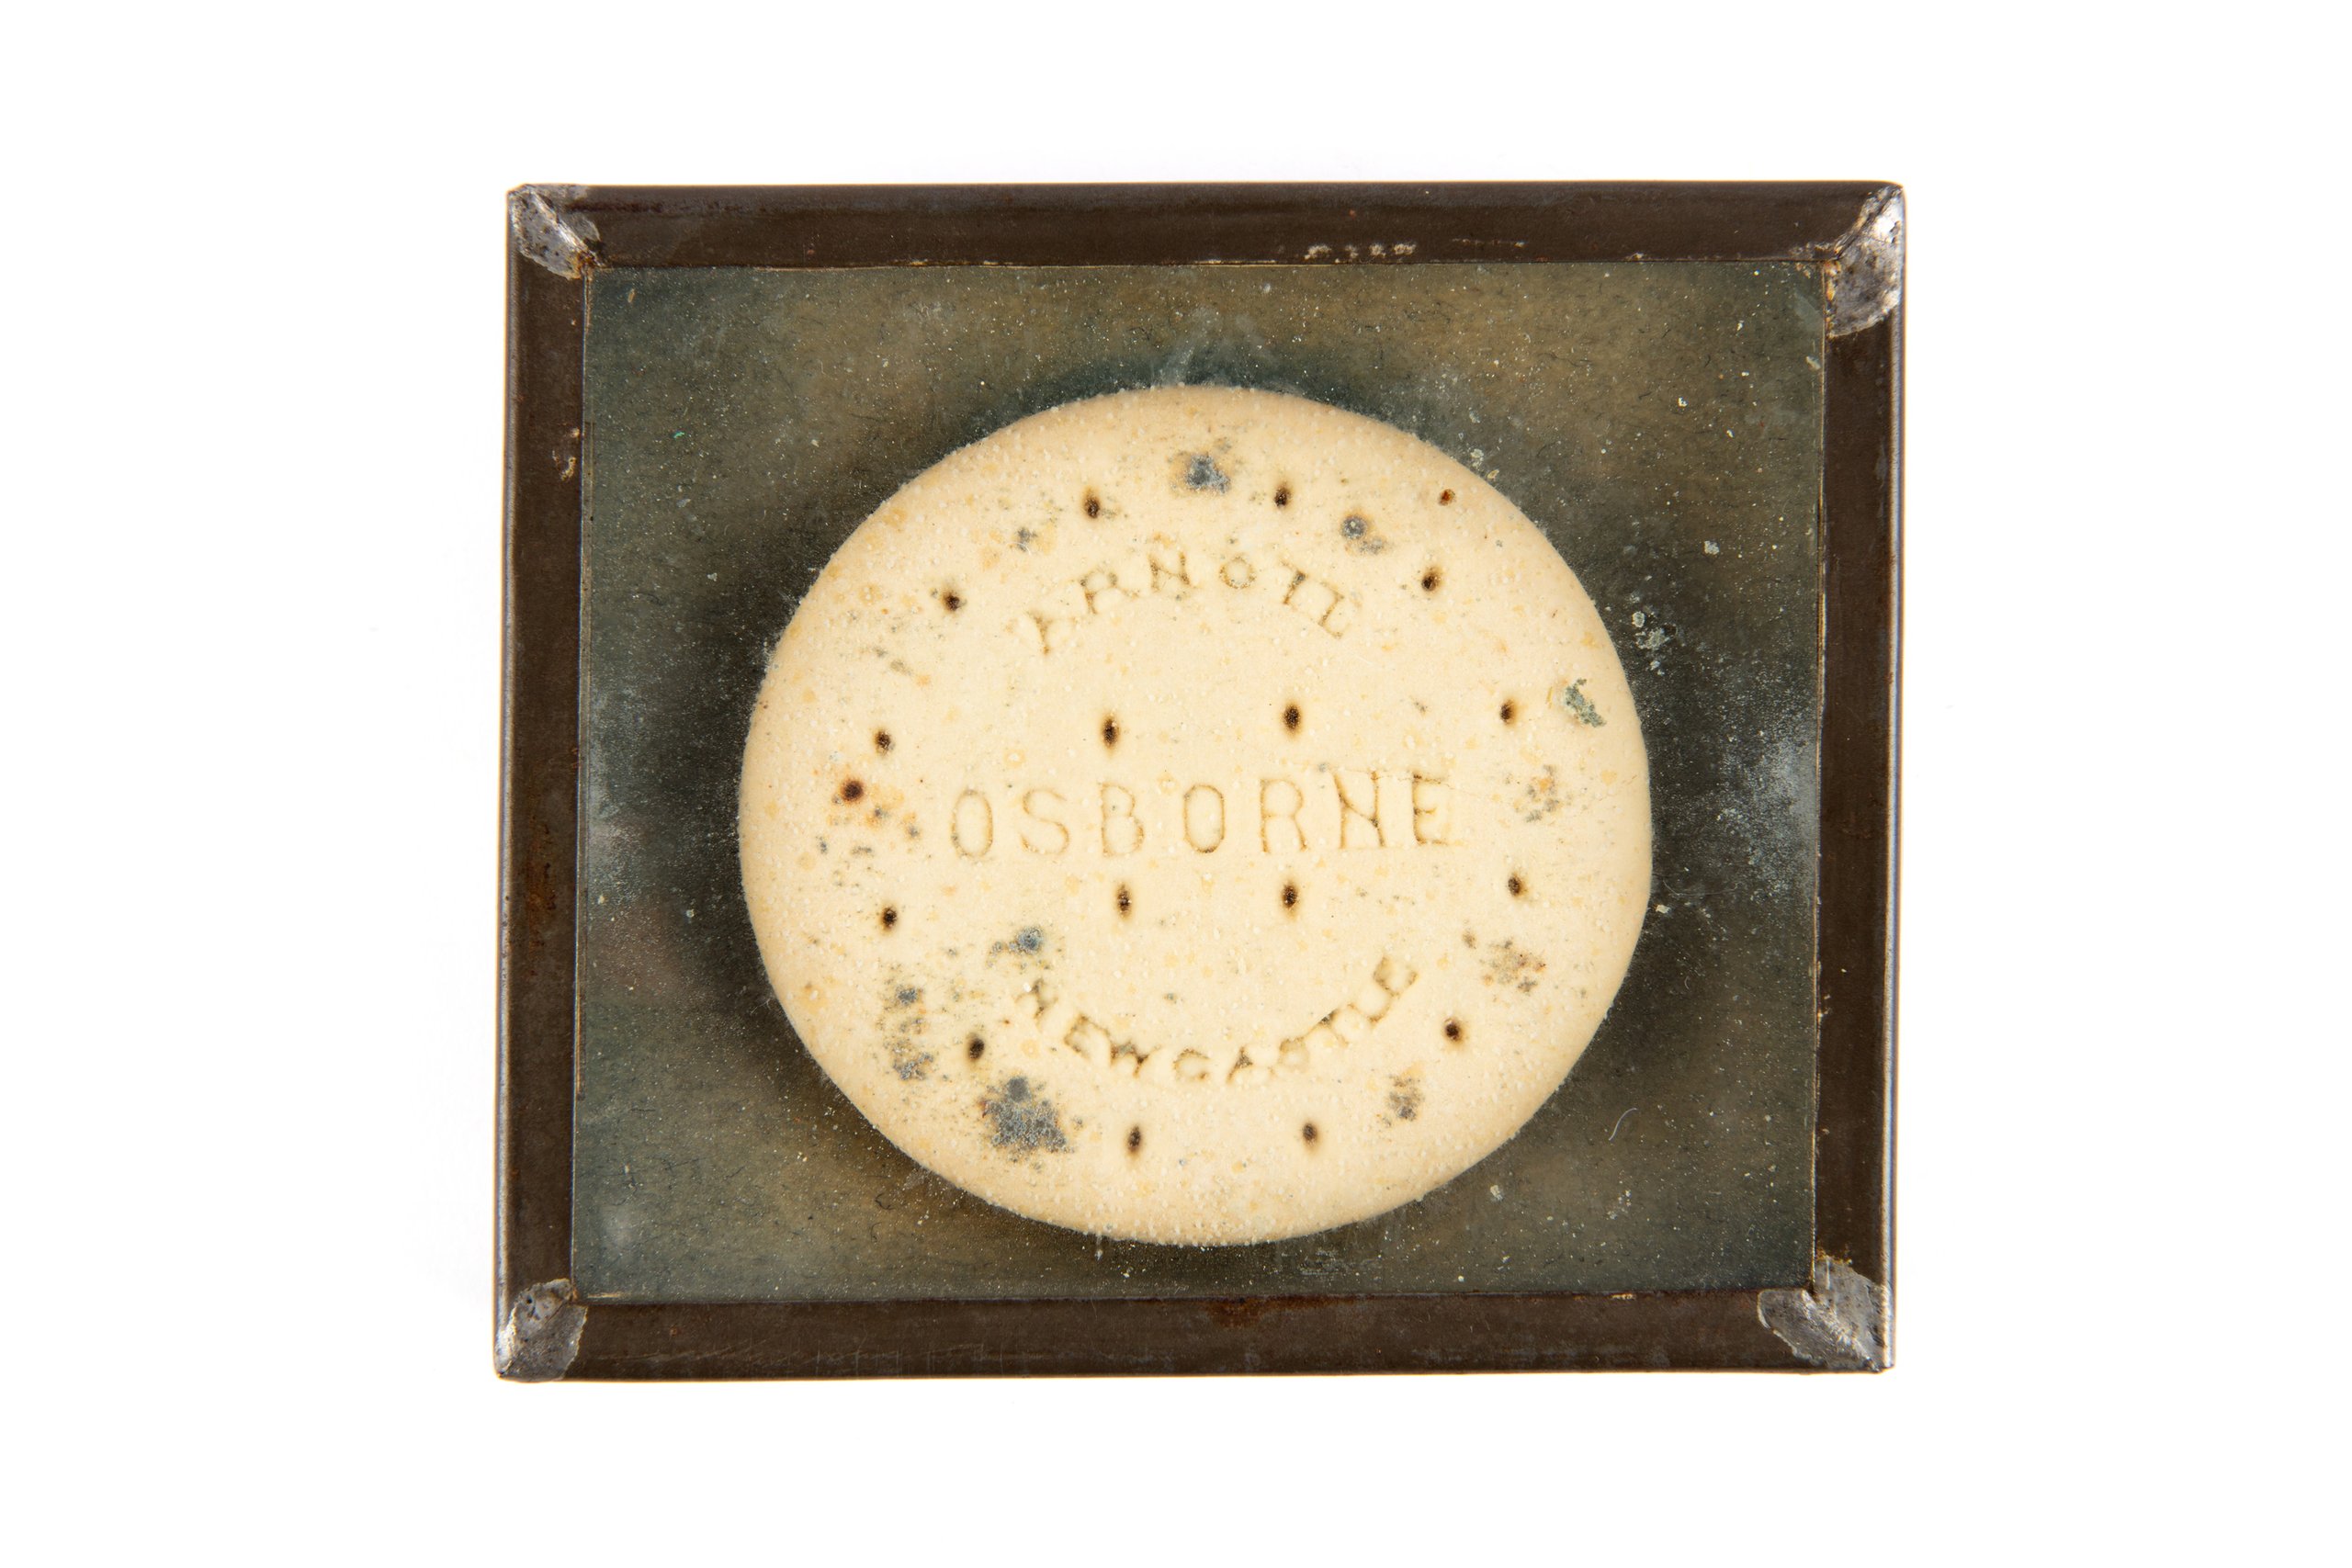 'Osborne' biscuit by William Arnott displayed at the All-Australian Exhibition